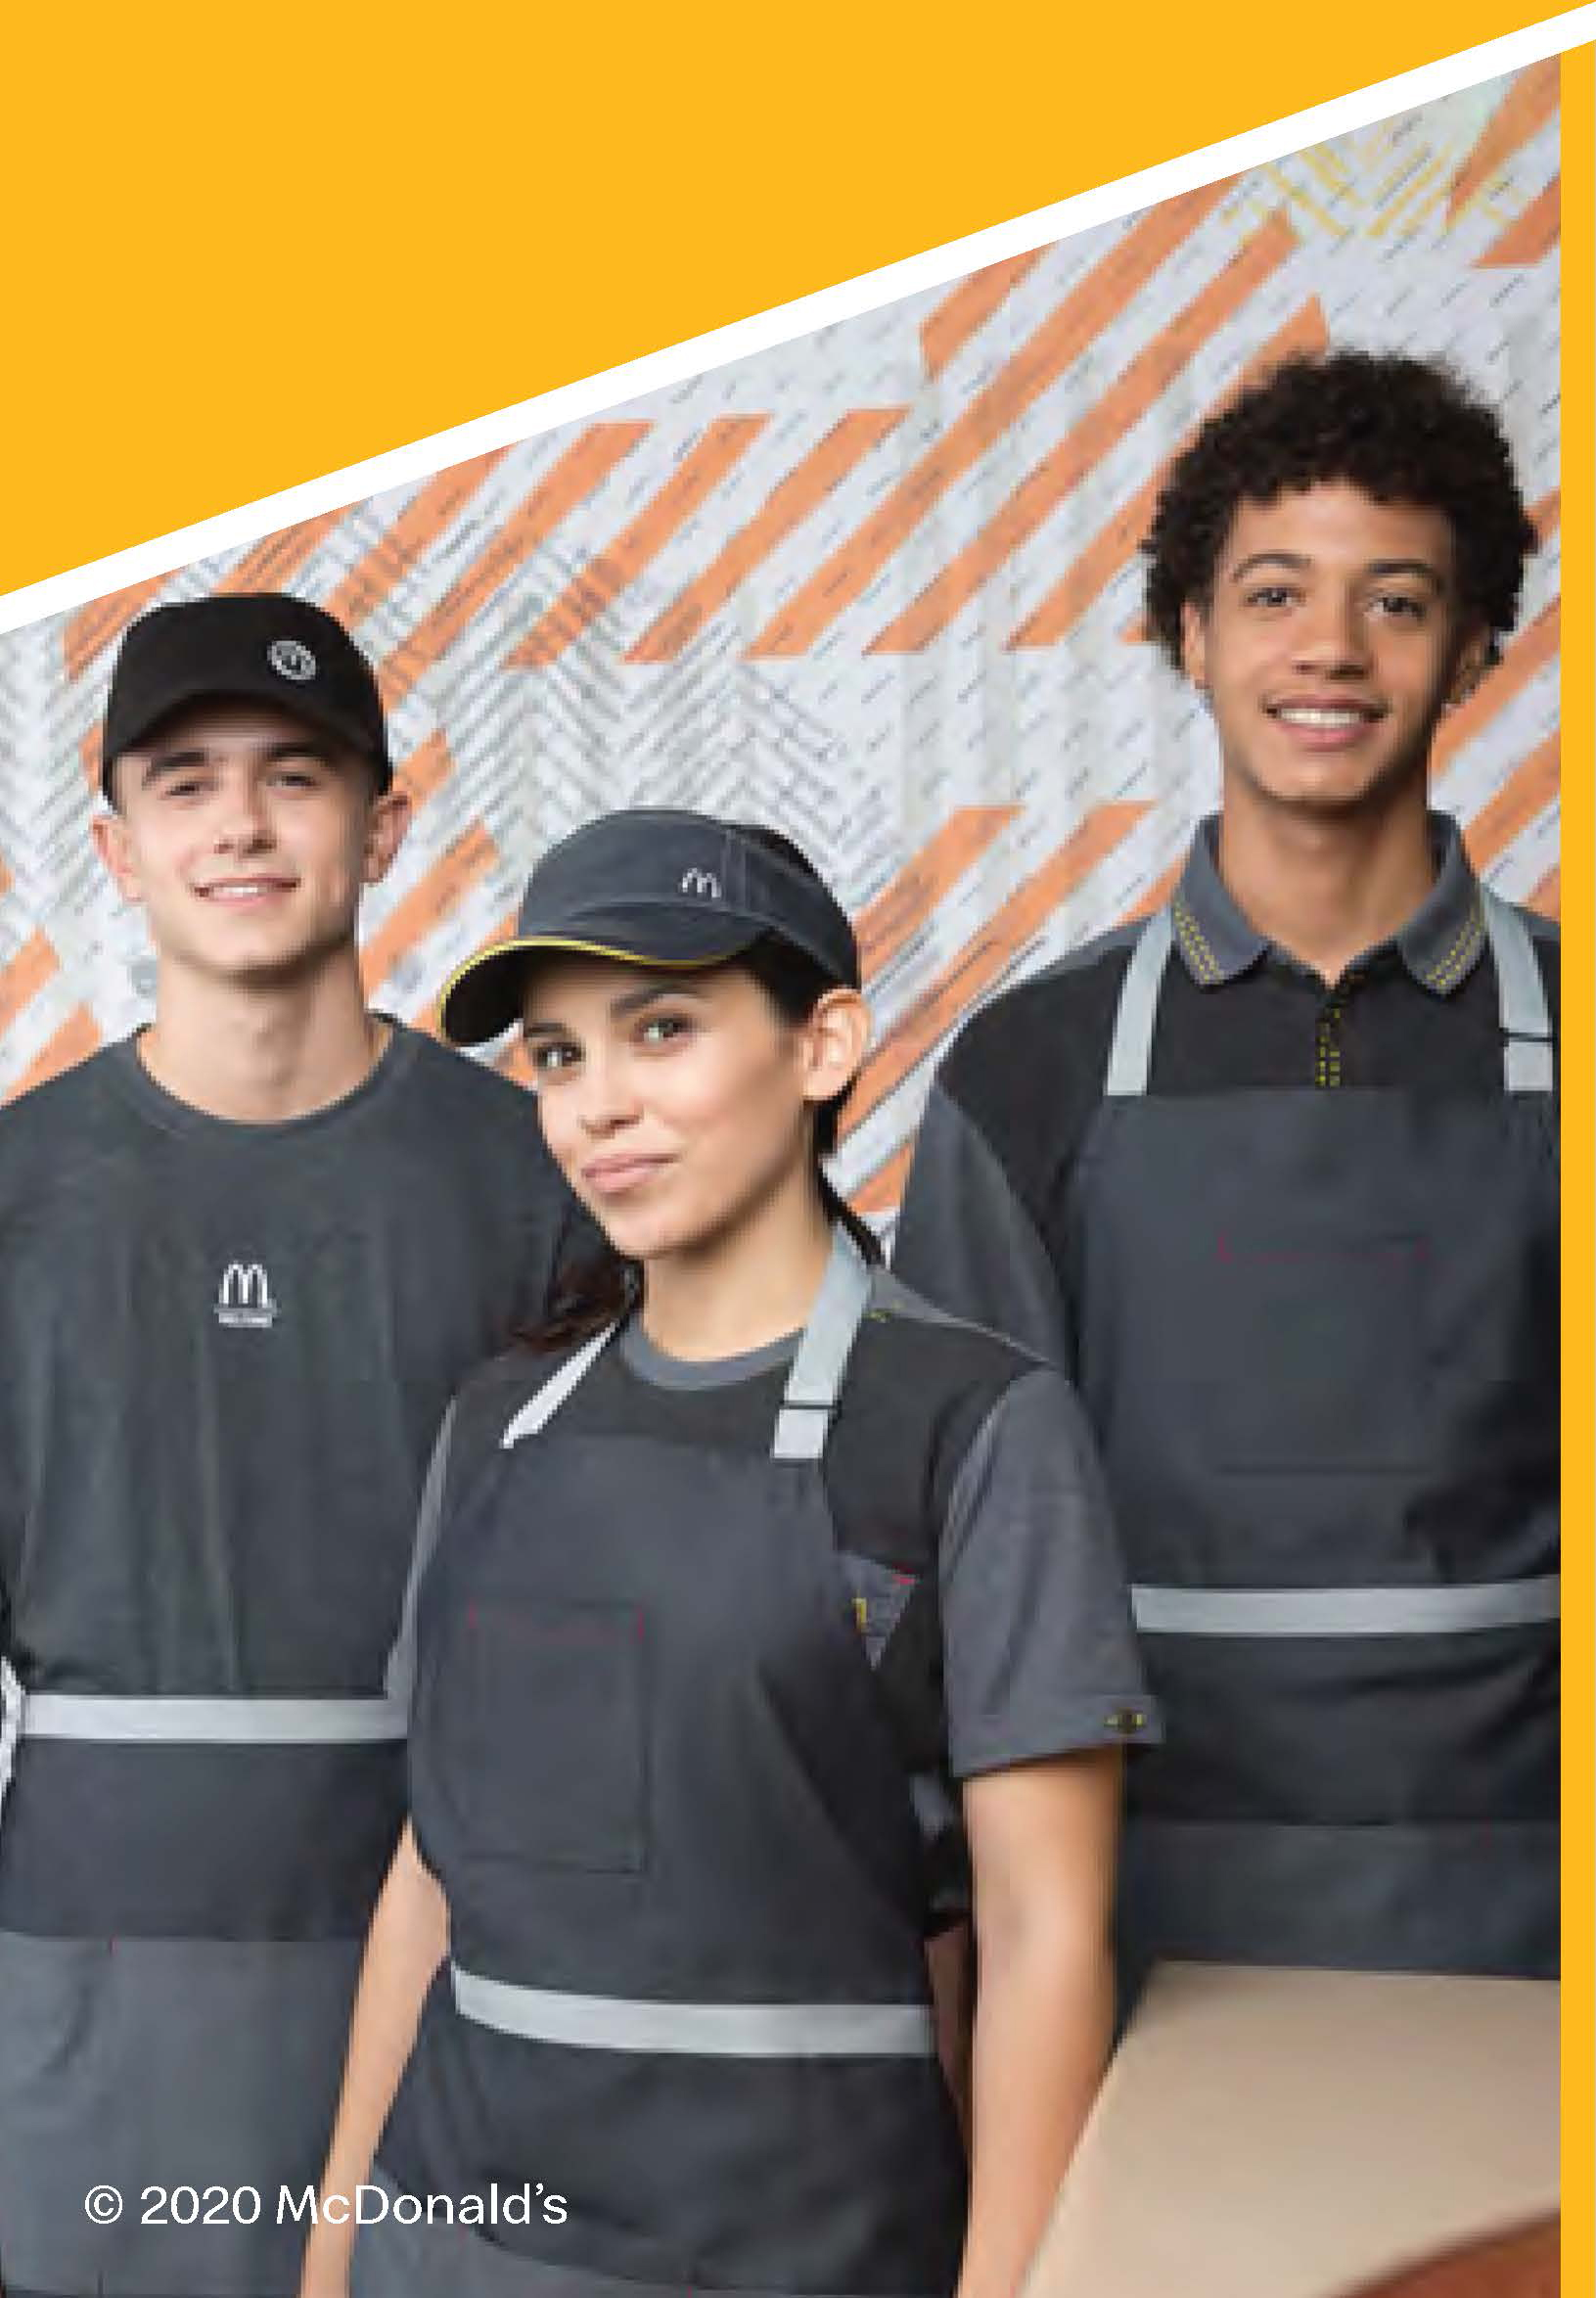 photo of three McDonald's employees